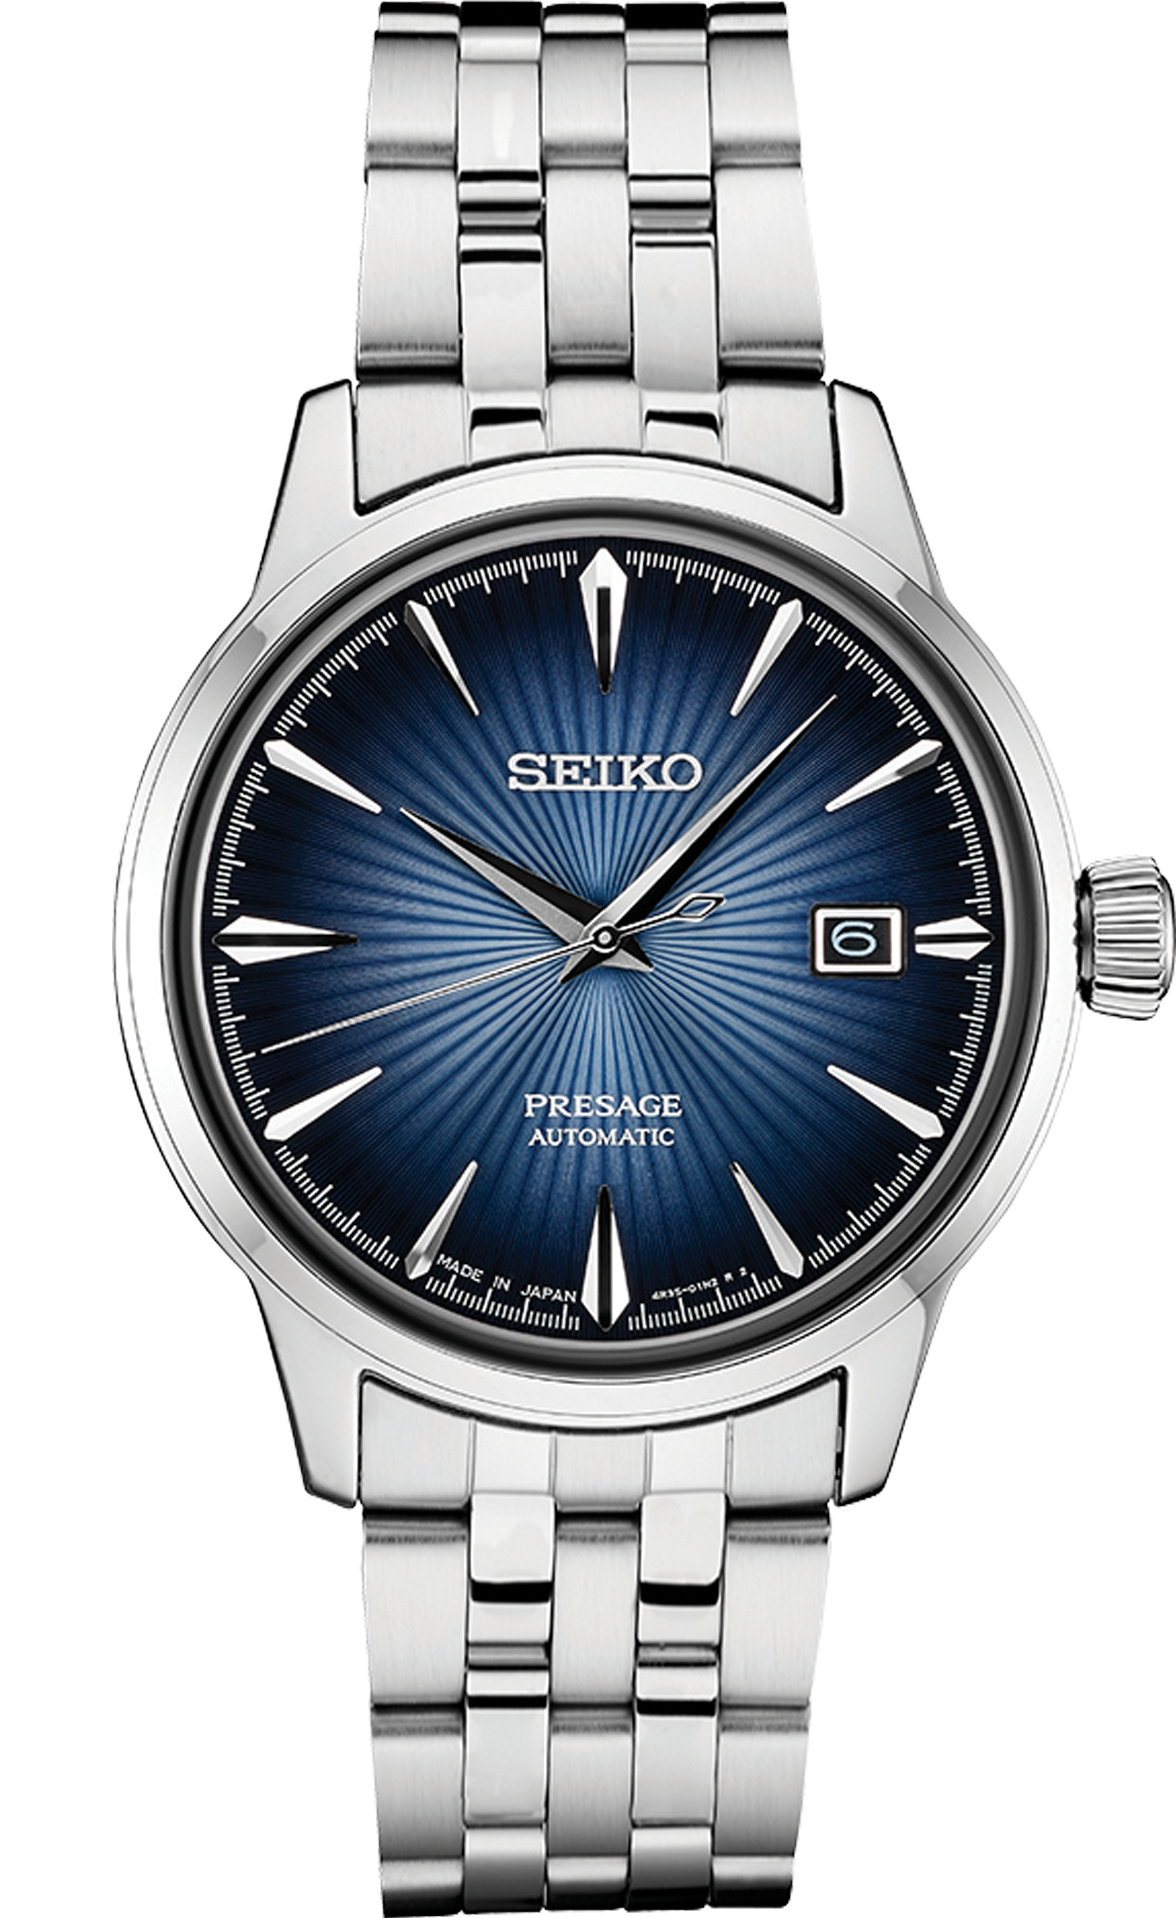 SEIKO MEN'S AUTOMATIC PRESAGE Cocktail Time Blue-Dial Watch